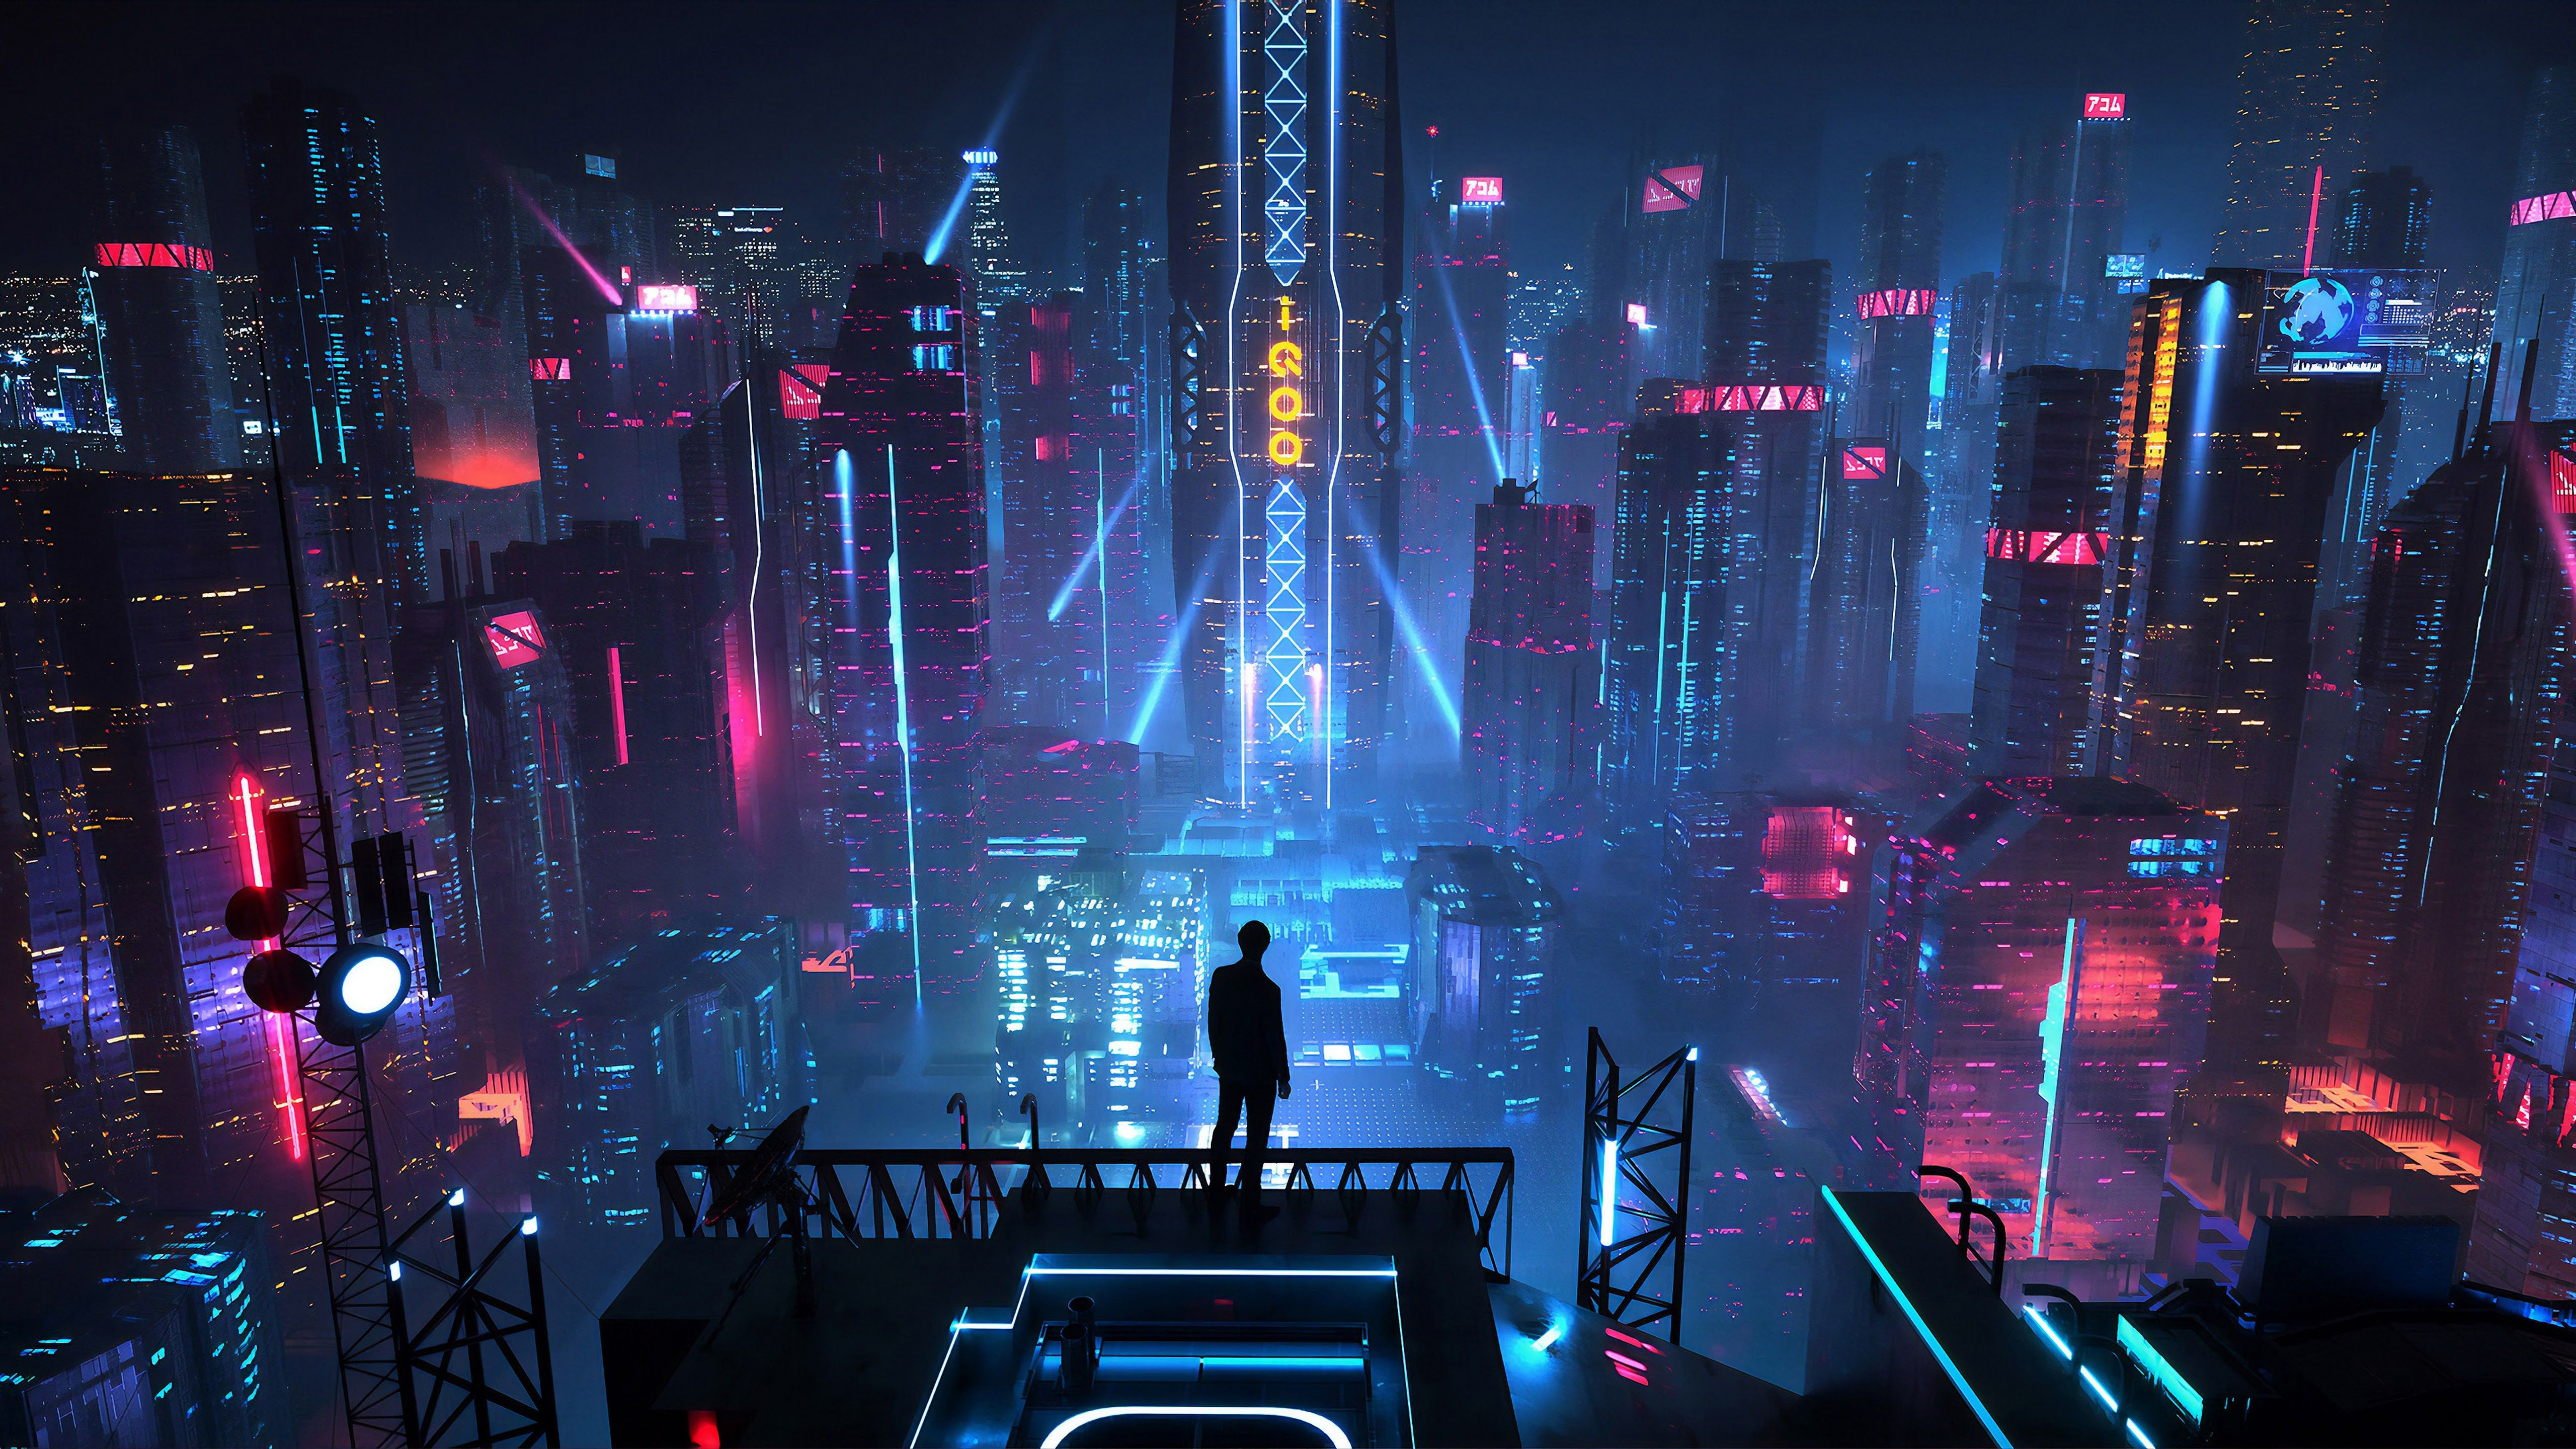 Sci Fi City Buildings Night Cityscape 4K Wallpaper